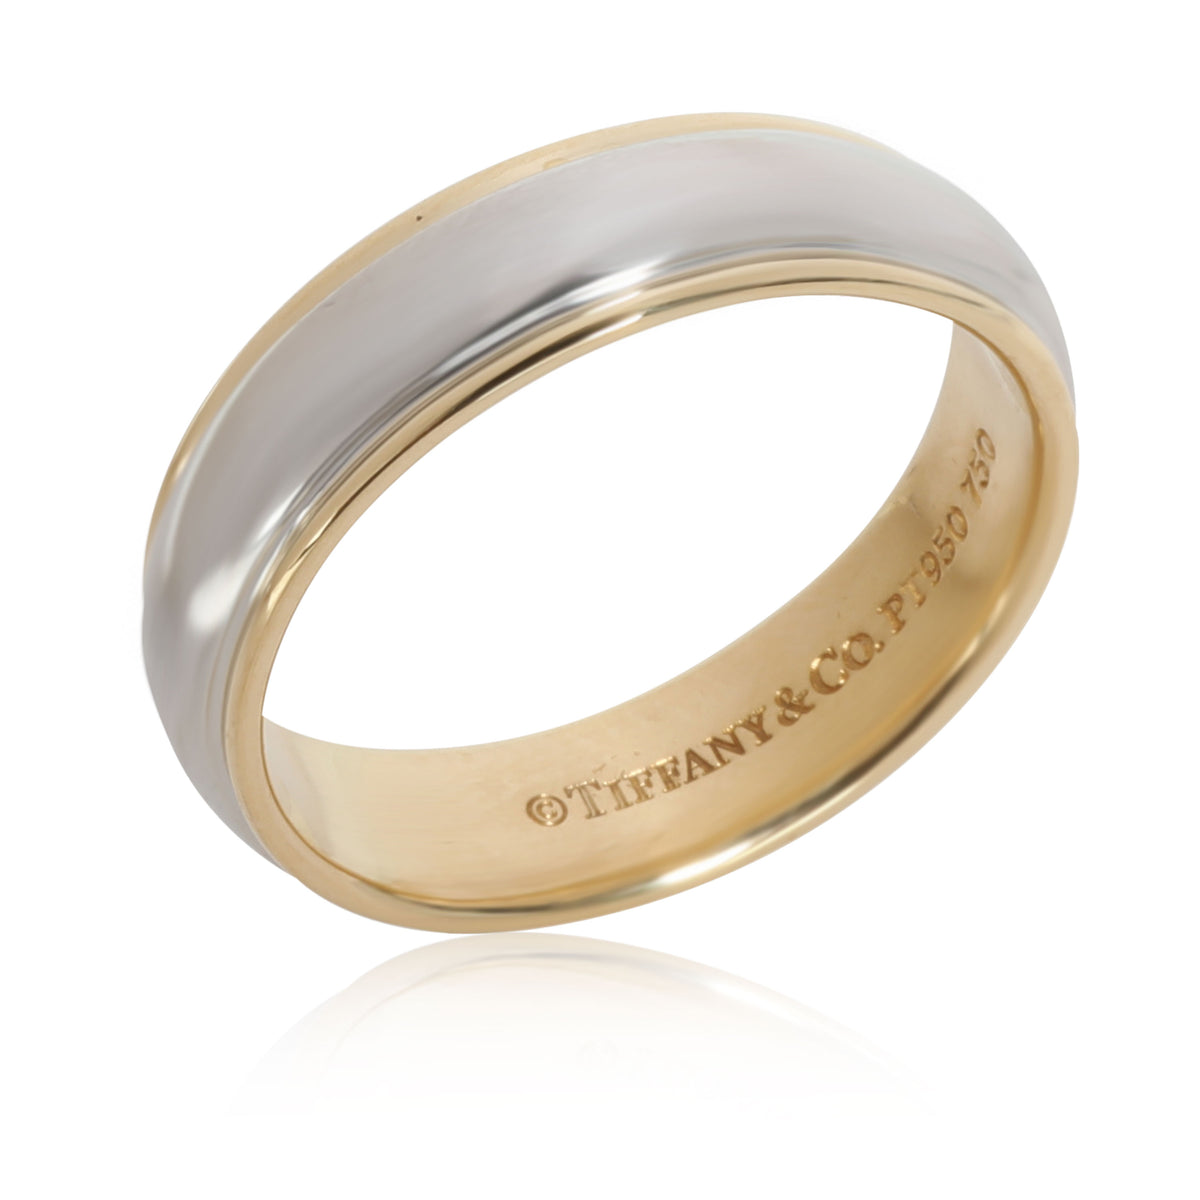 Tiffany & Co. Wedding Band in 18K Yellow Gold/Platinum